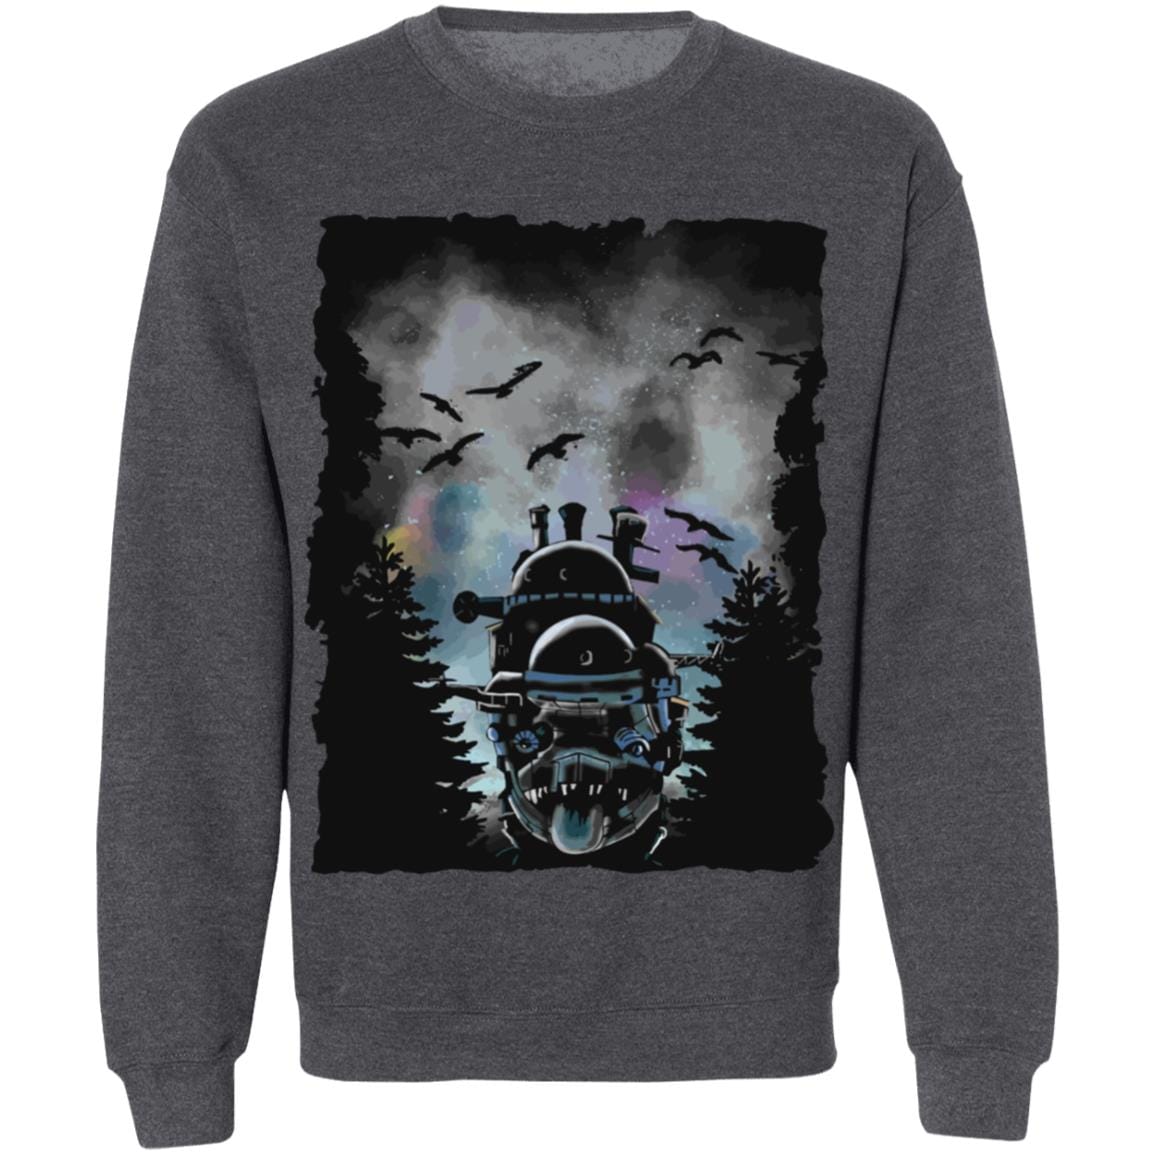 Howl’s Moving Castle At Night Sweatshirt